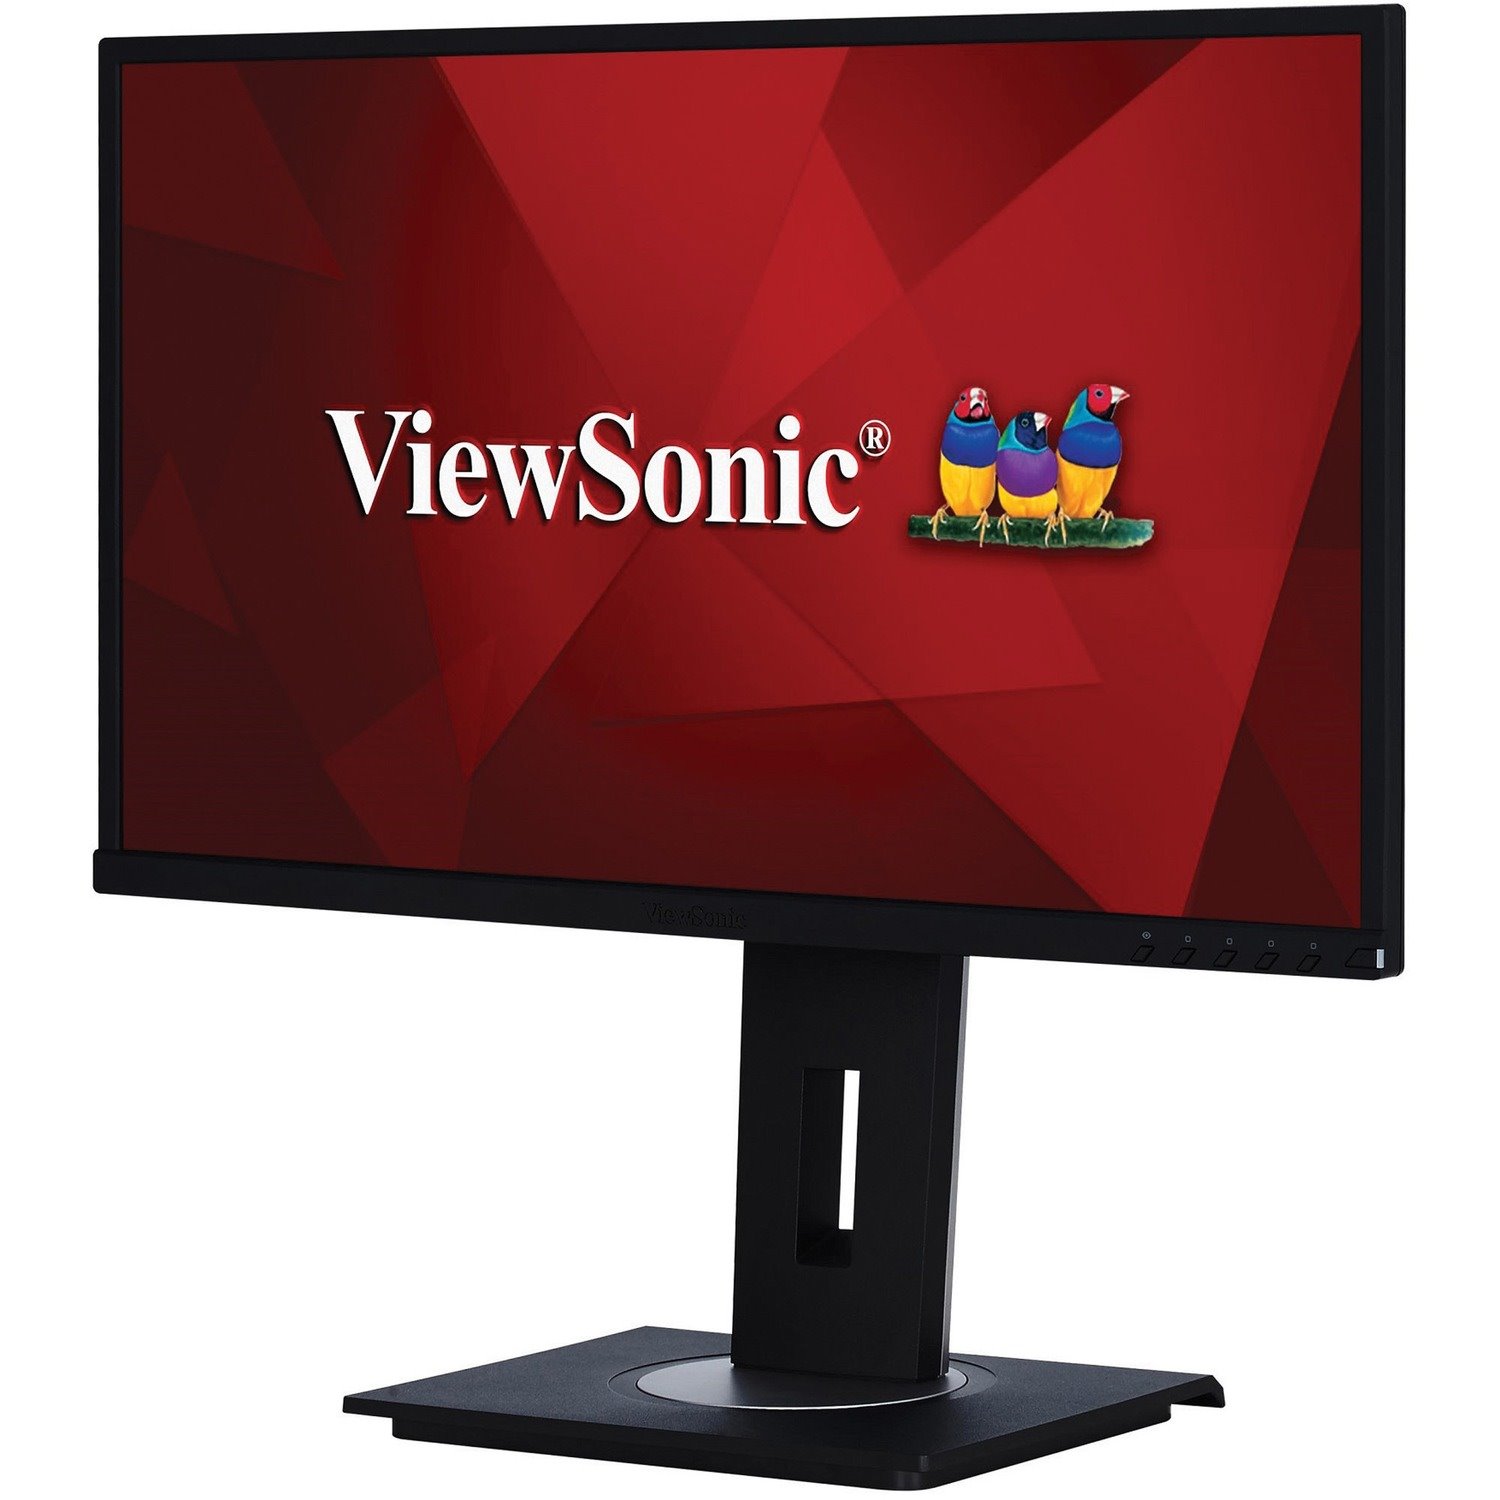 ViewSonic VG2448 24" Full HD WLED LCD Monitor - 16:9 - Black